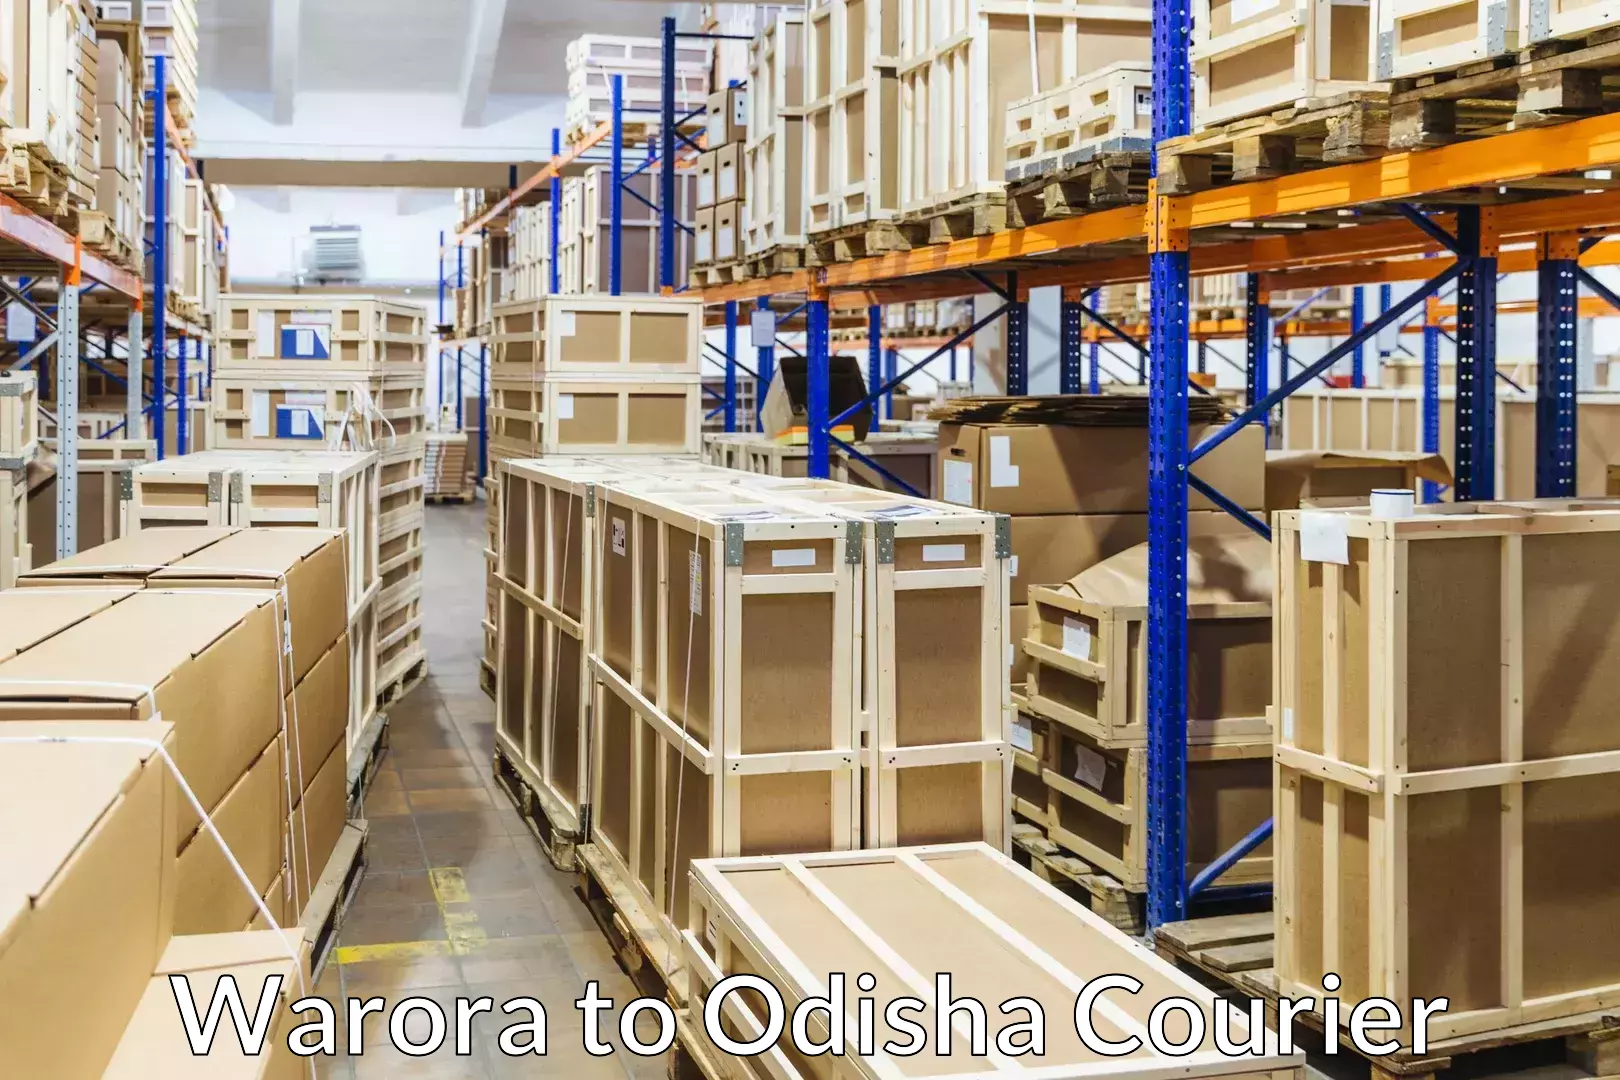 Moving and packing experts Warora to Odisha